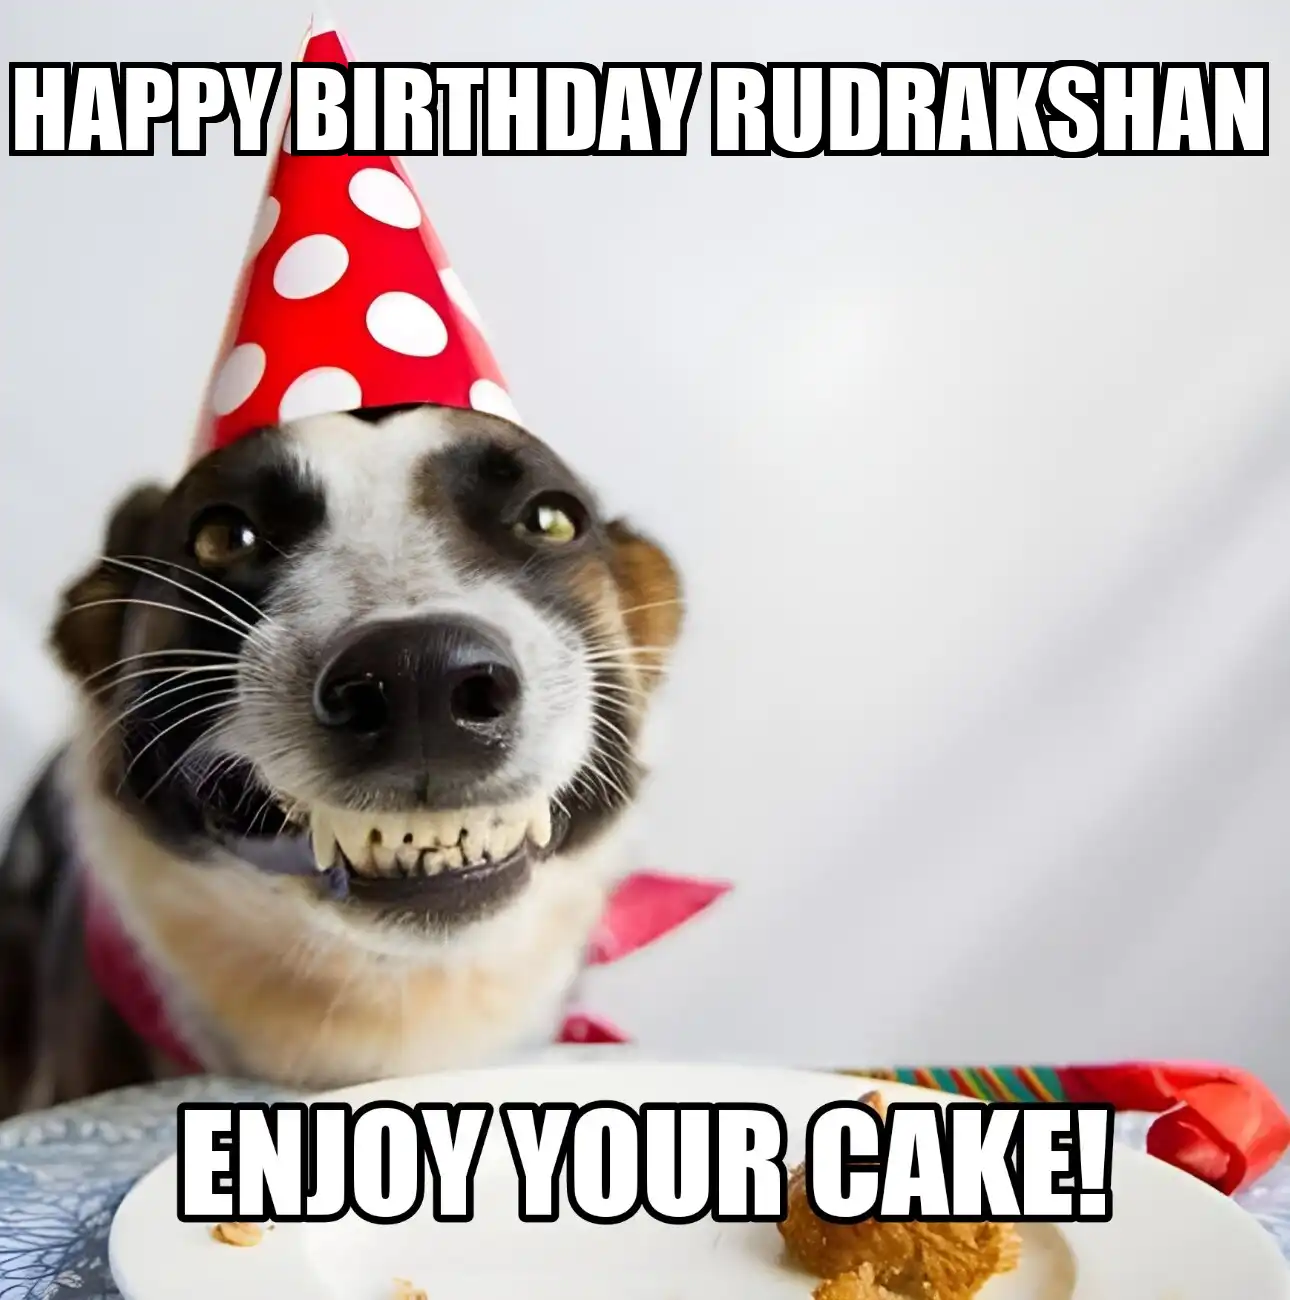 Happy Birthday Rudrakshan Enjoy Your Cake Dog Meme